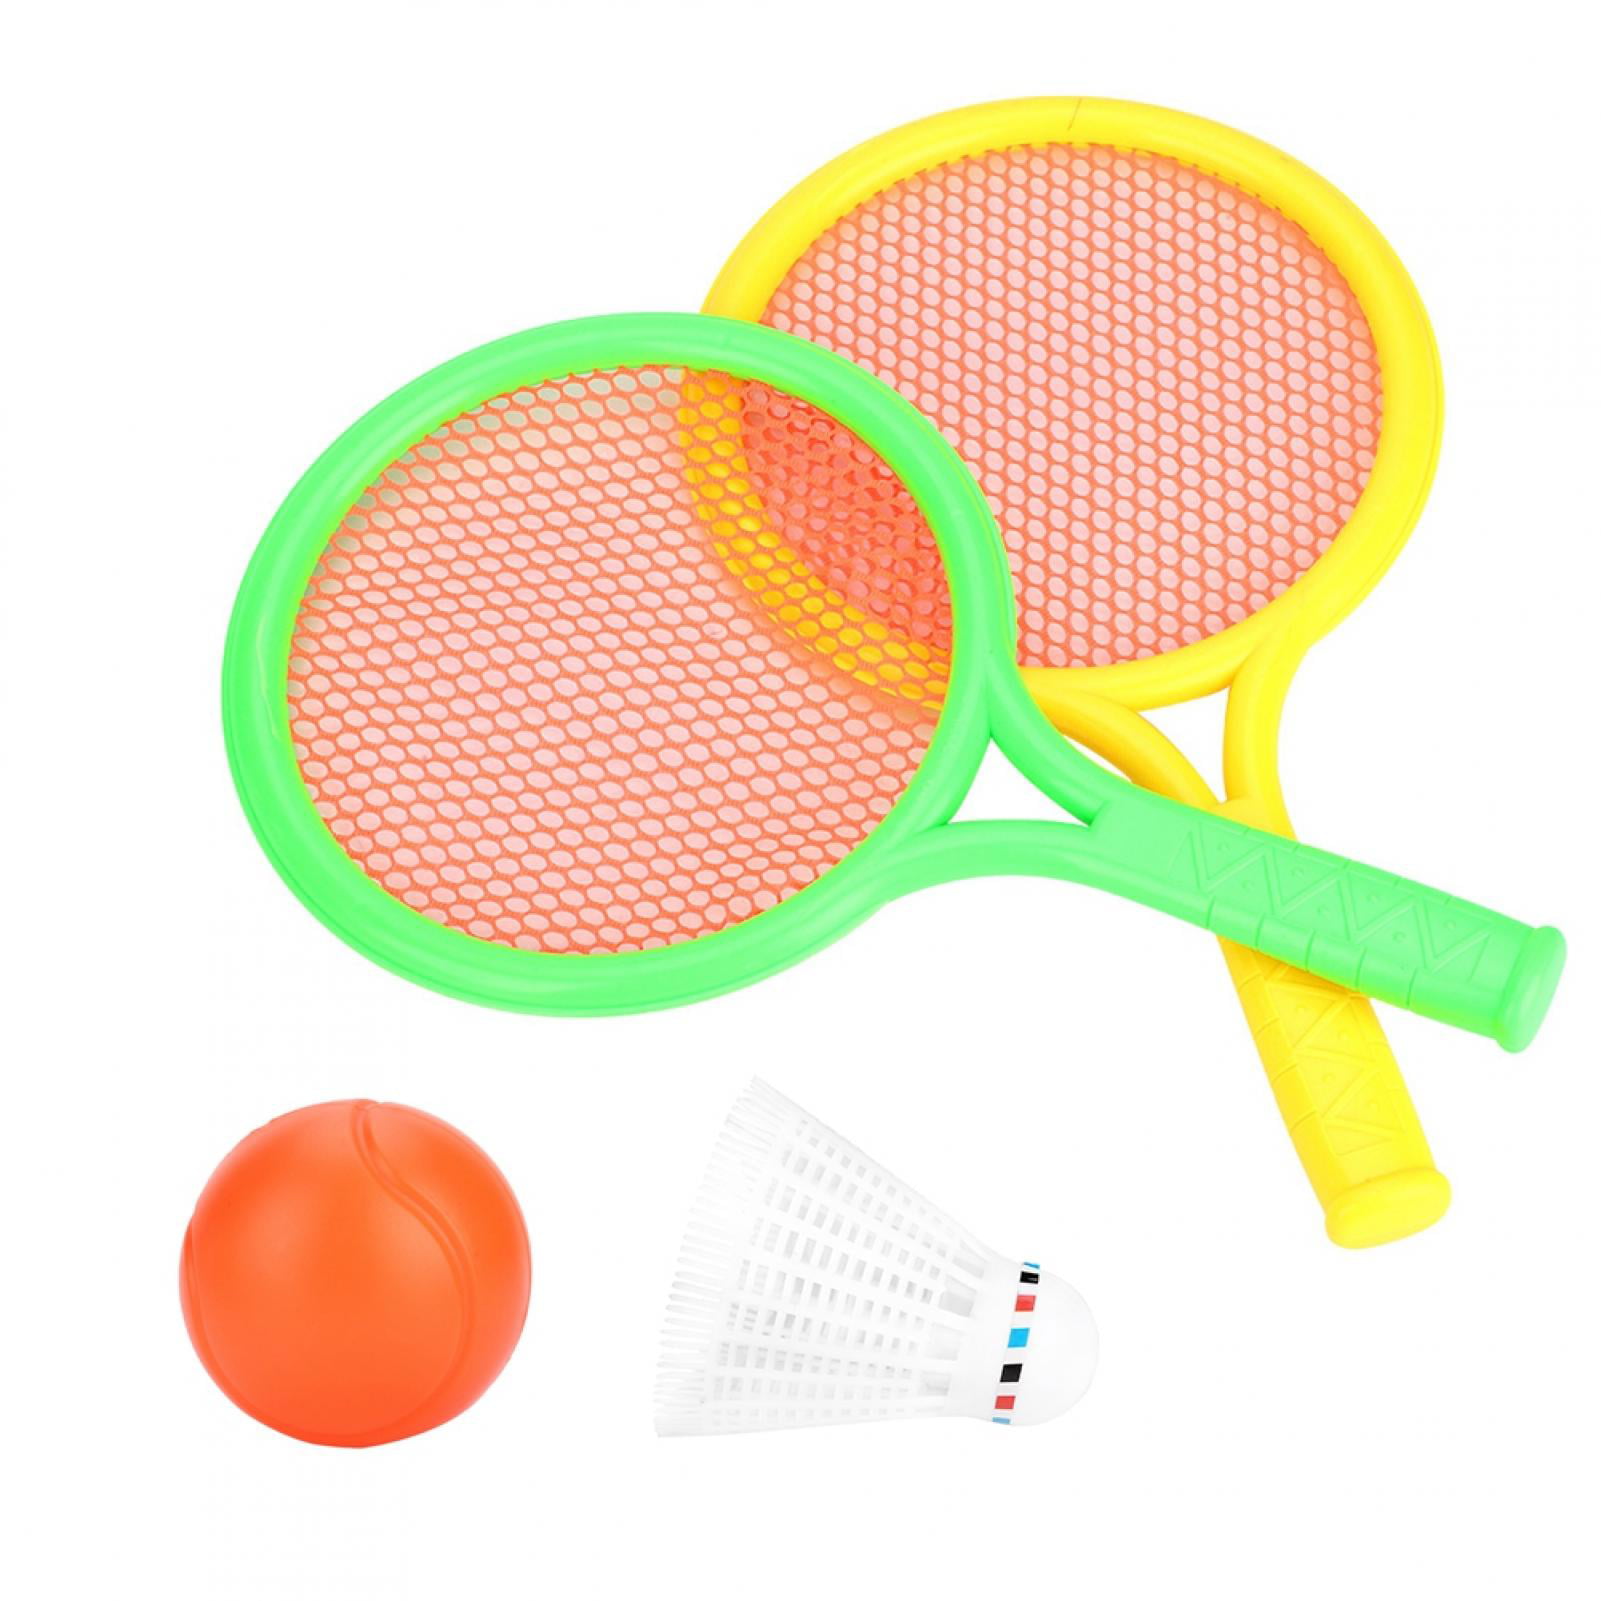 Details about   Tennis Racket Set Interesting Baby Toys for Children Parents Kindergarden Kids 